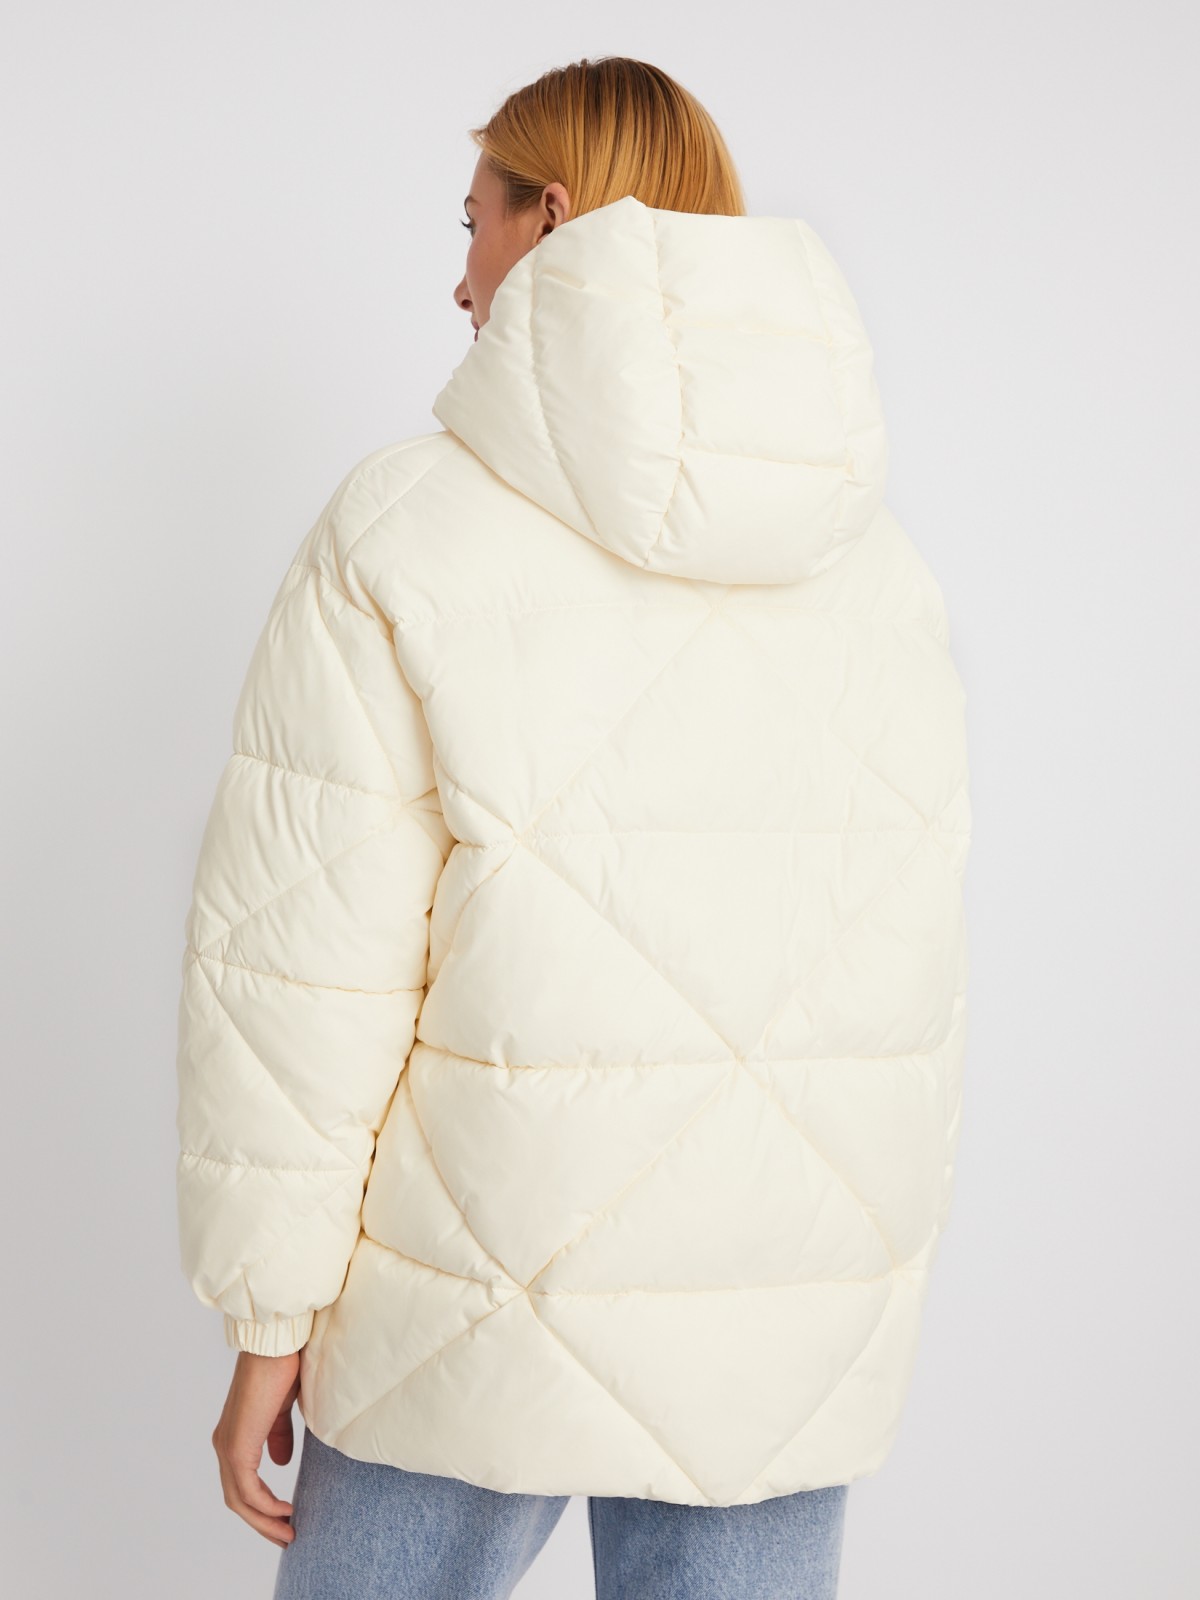 ASOS DESIGN oversized jersey hooded coat in cream